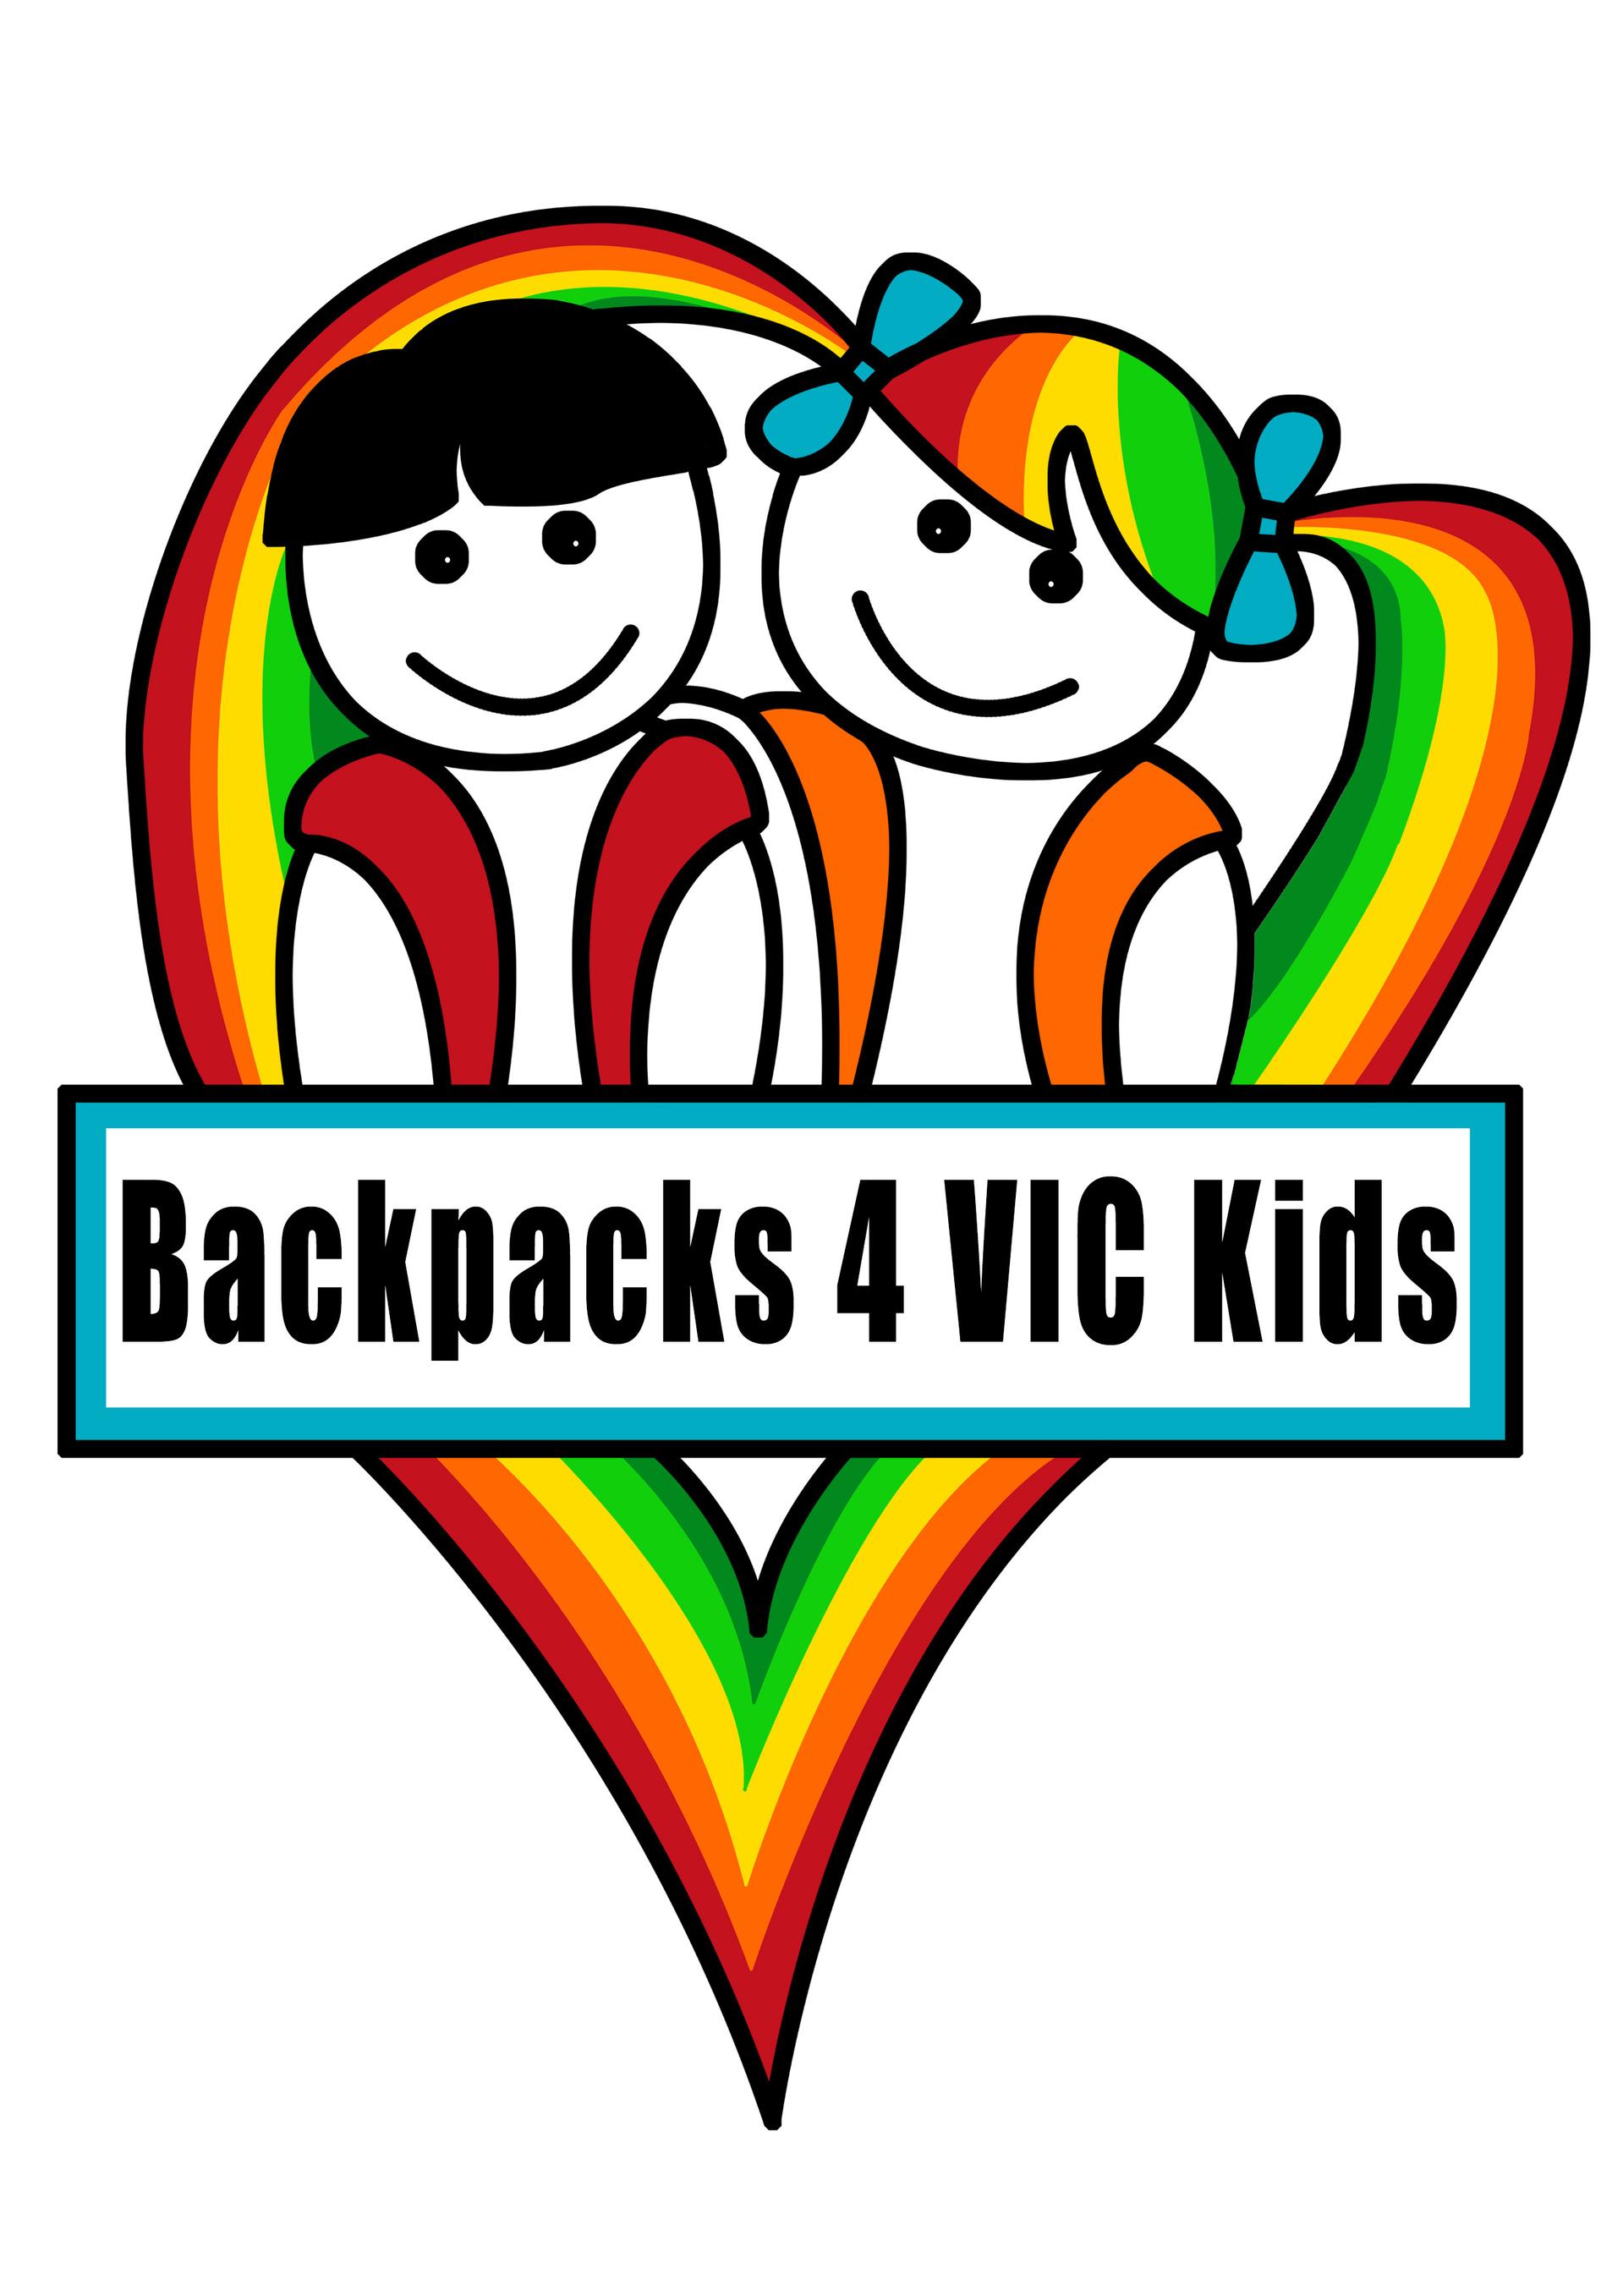 Backpacks 4 Vic Kids